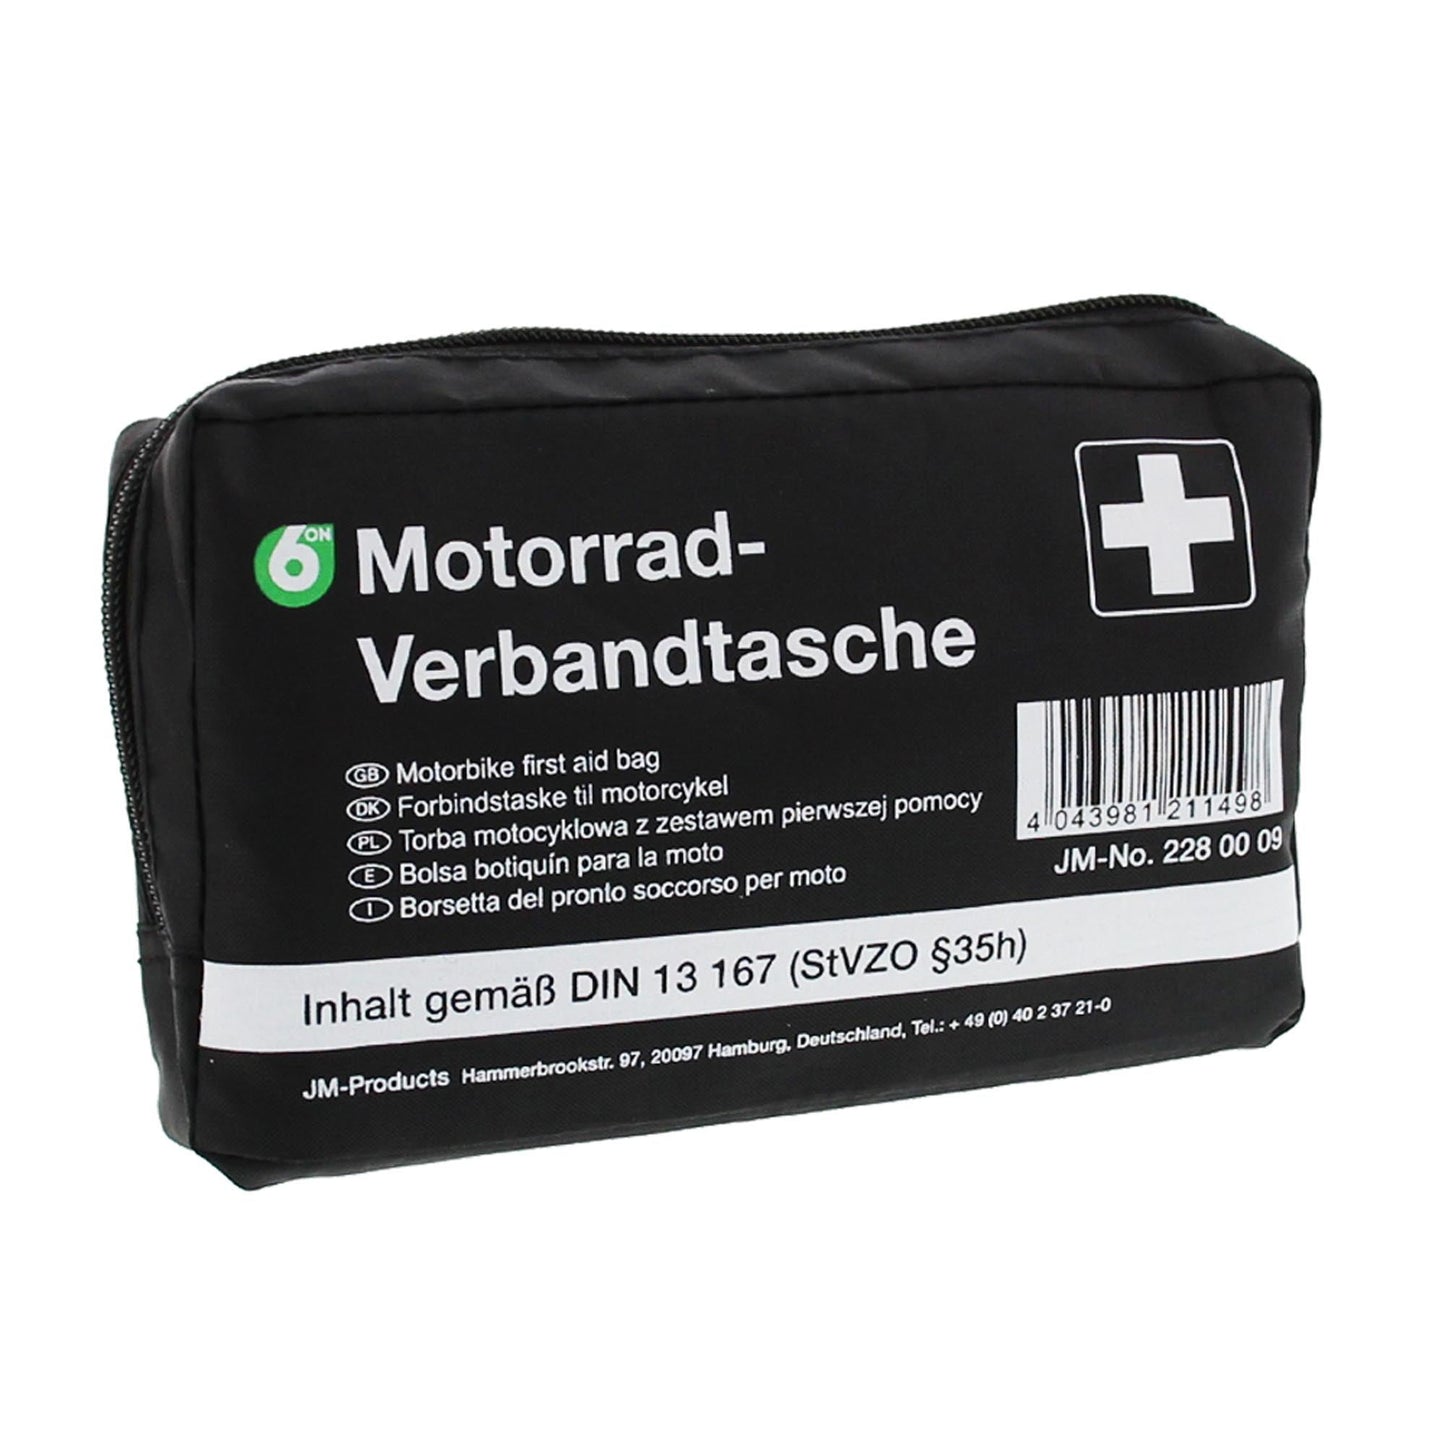 Motorrad-Verbandtasche DIN 13167 - TMN-shop.de